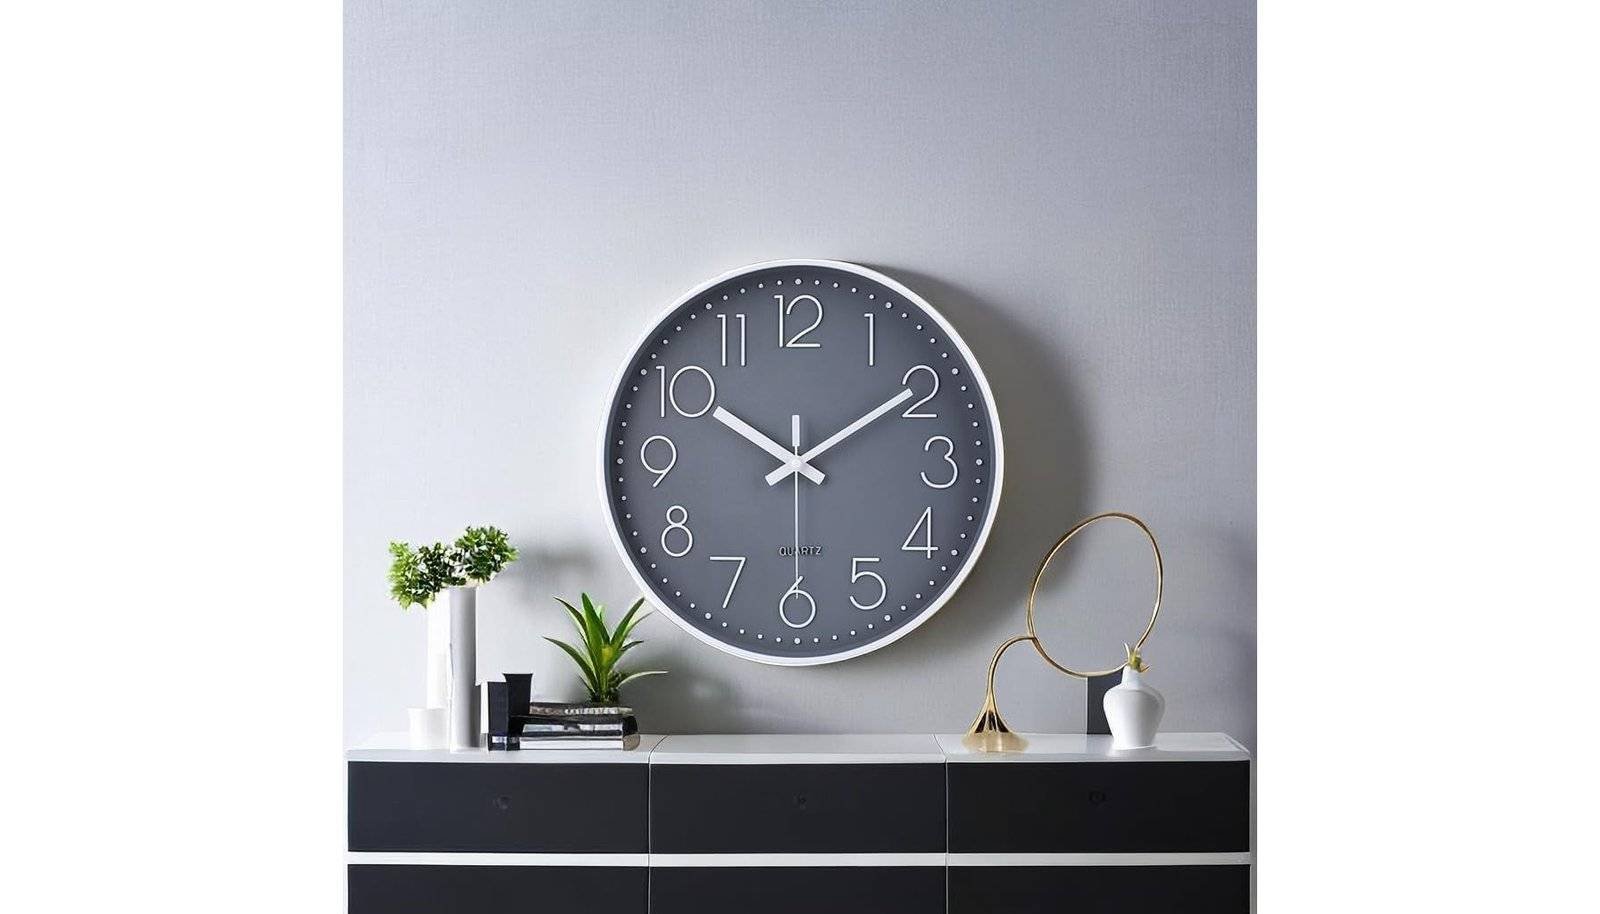 JUJUDA 17 inch Decorative Big Kitchen Room Wall Clock Review